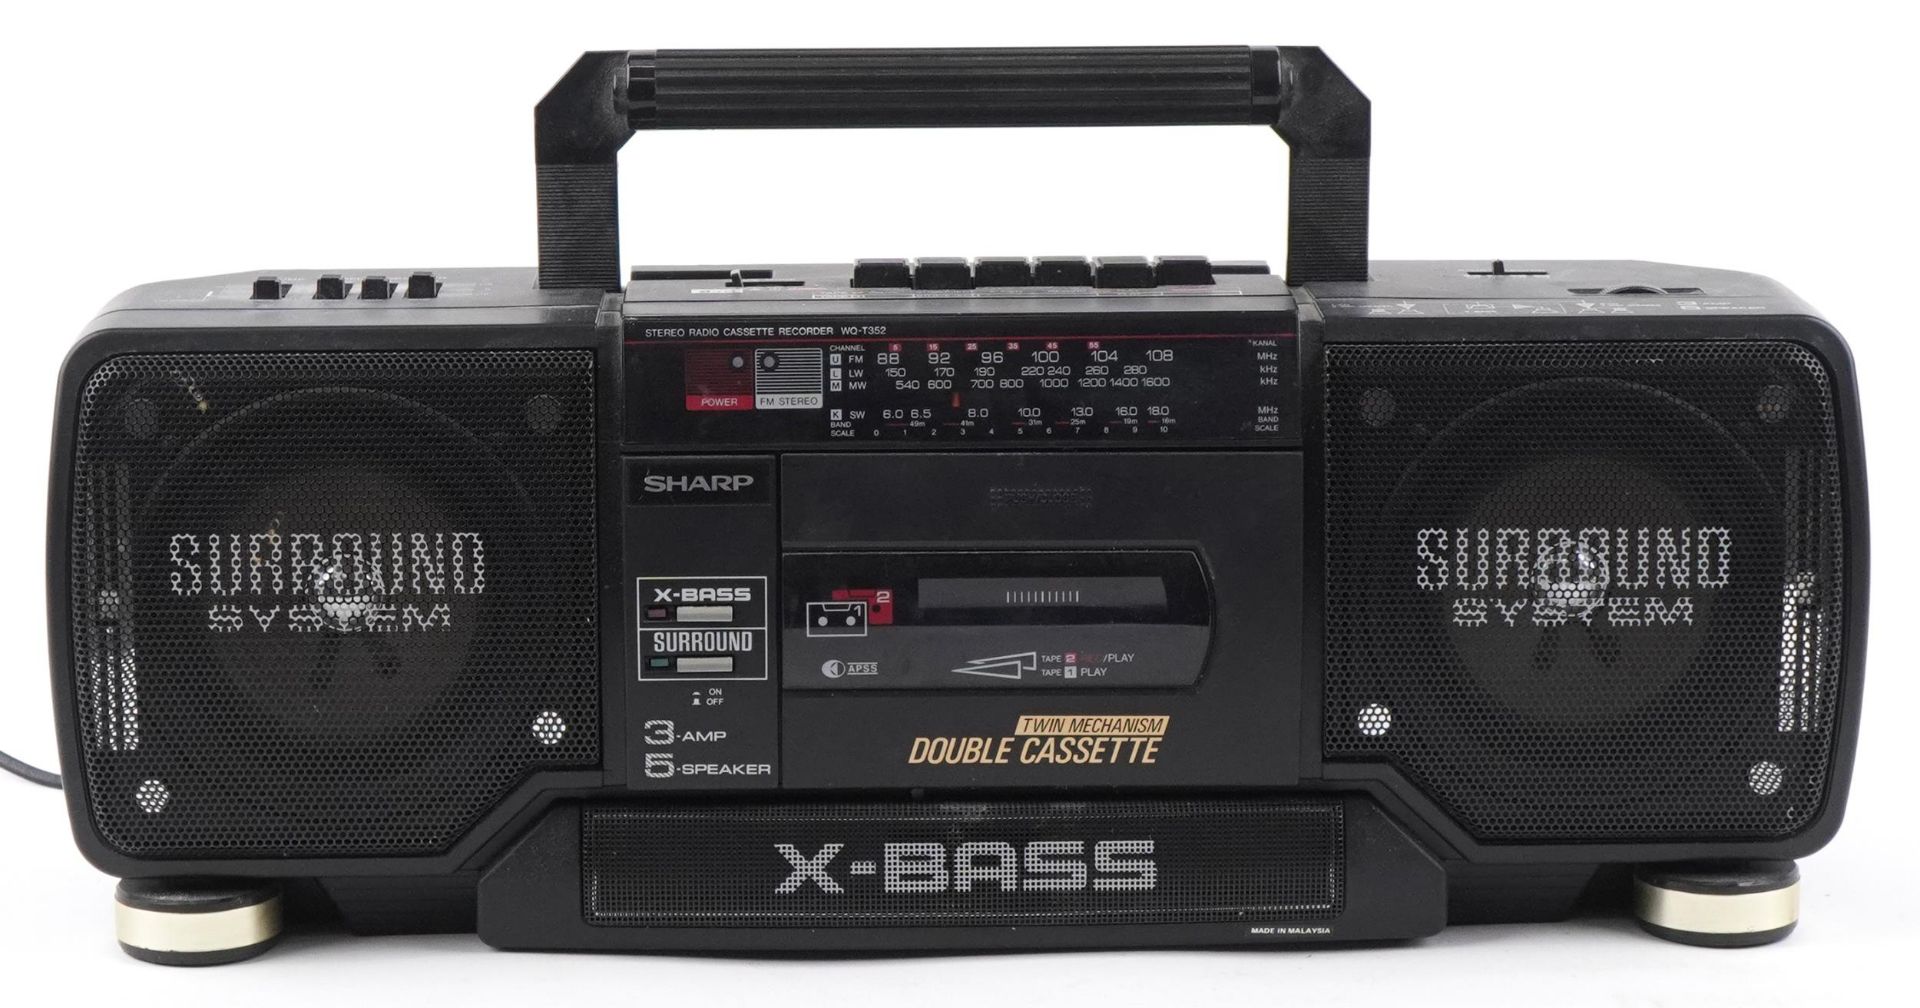 Vintage Sharp stereo radio cassette recorder, model WQ-T352E (BK) : For further information on